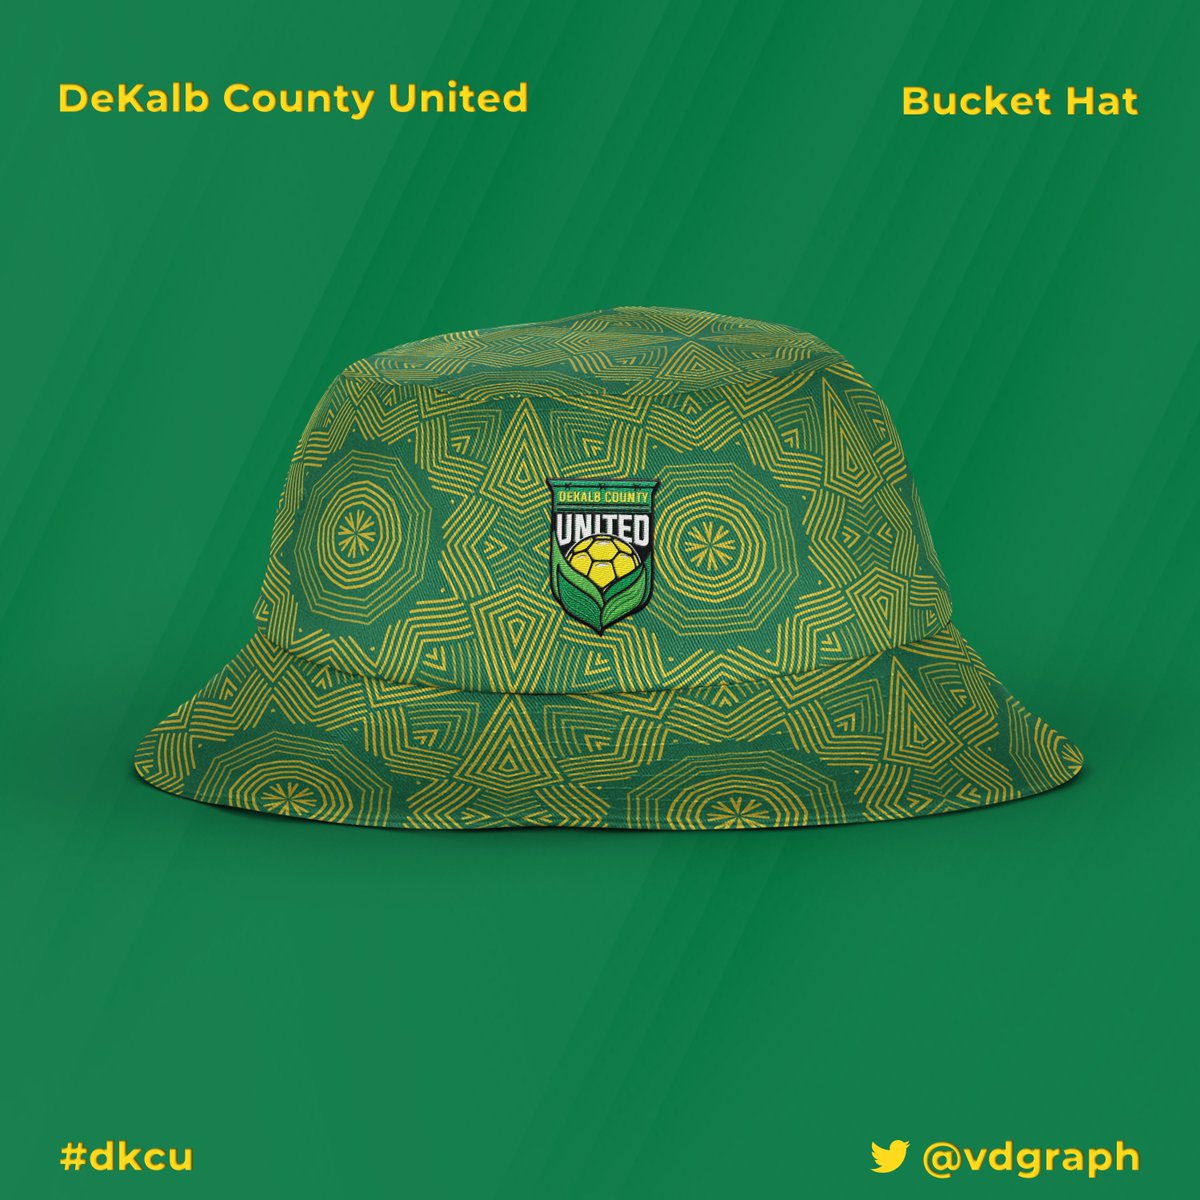 DeKalb County United (Bucket Hat Concept)
Made for @CoachHall10
Follow @vdgraph for more! 🔔 
#DeKalb #DeKalblife #proudlyDeKalb #buckethat #Concept